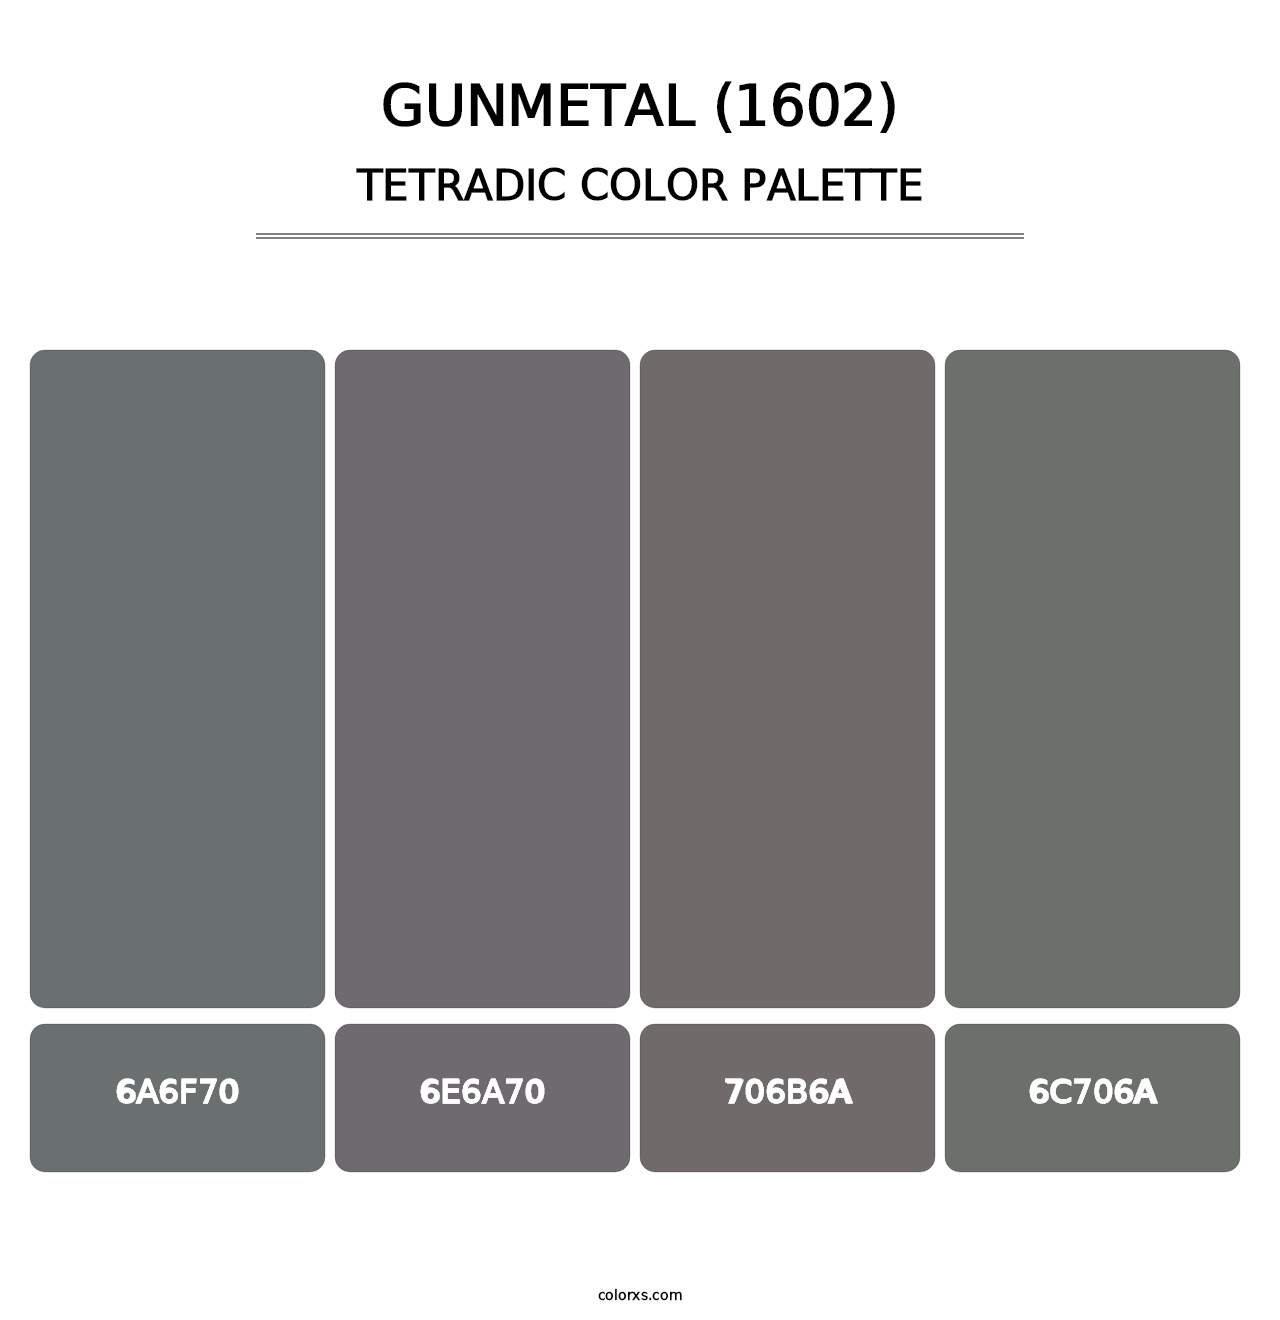 Gunmetal (1602) - Tetradic Color Palette